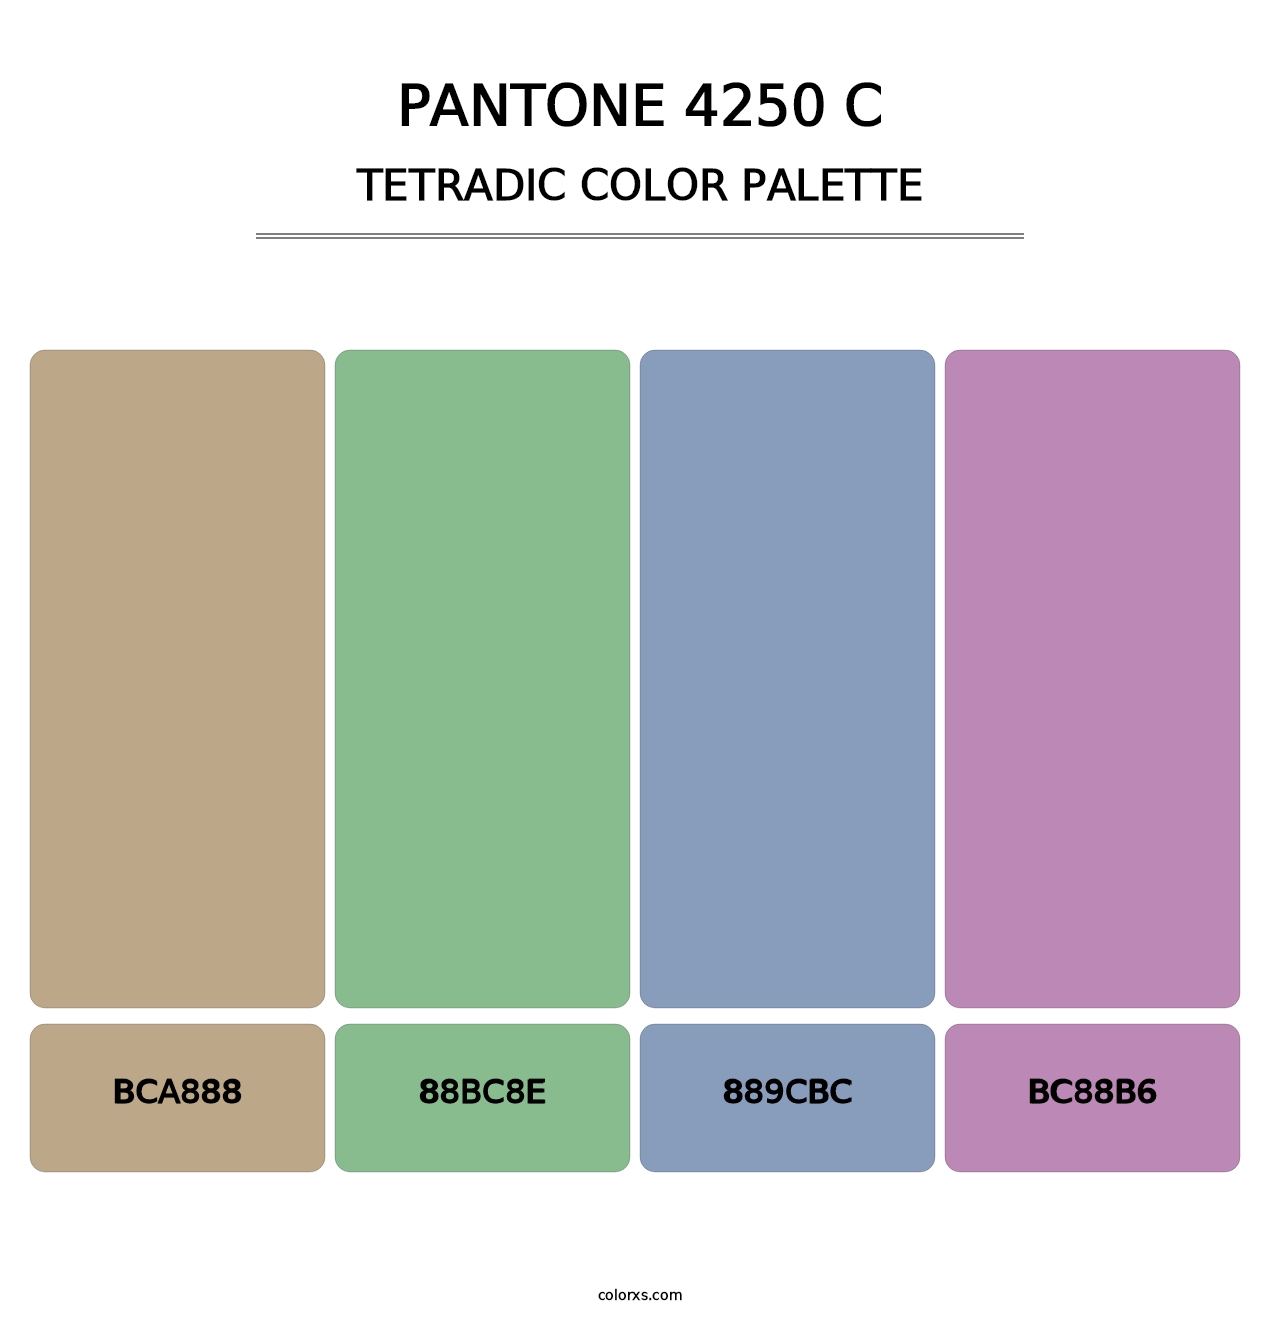 PANTONE 4250 C - Tetradic Color Palette